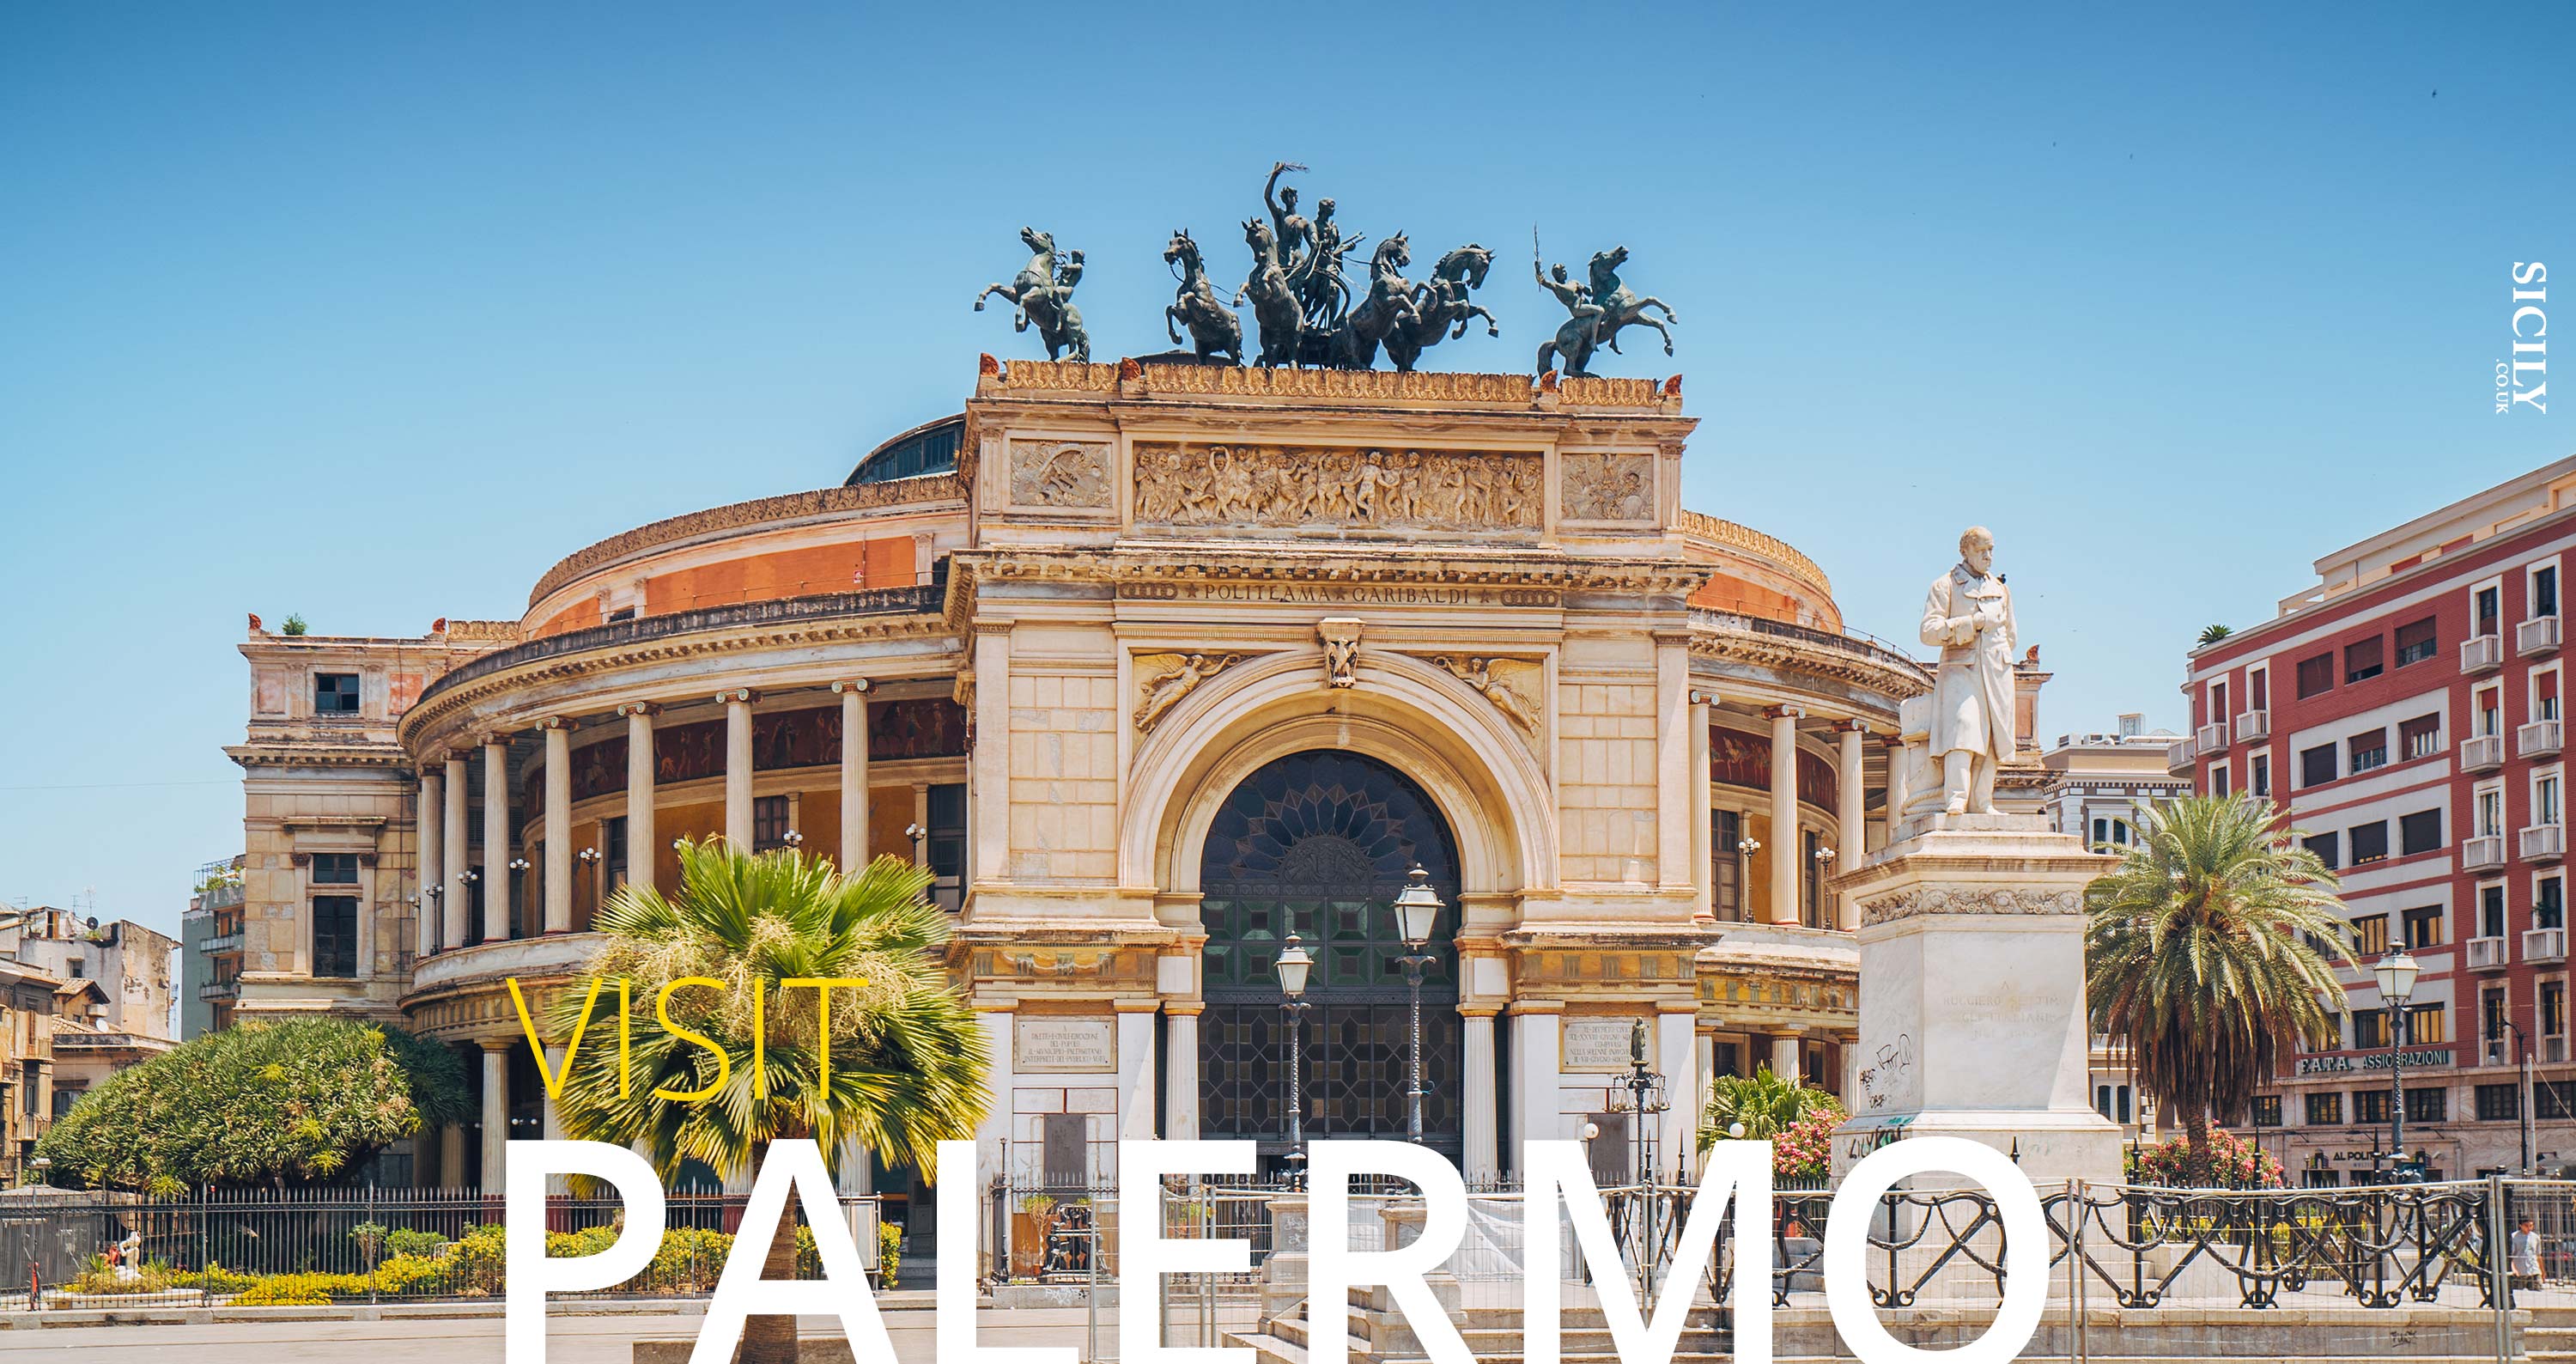 Palermo - Sicily